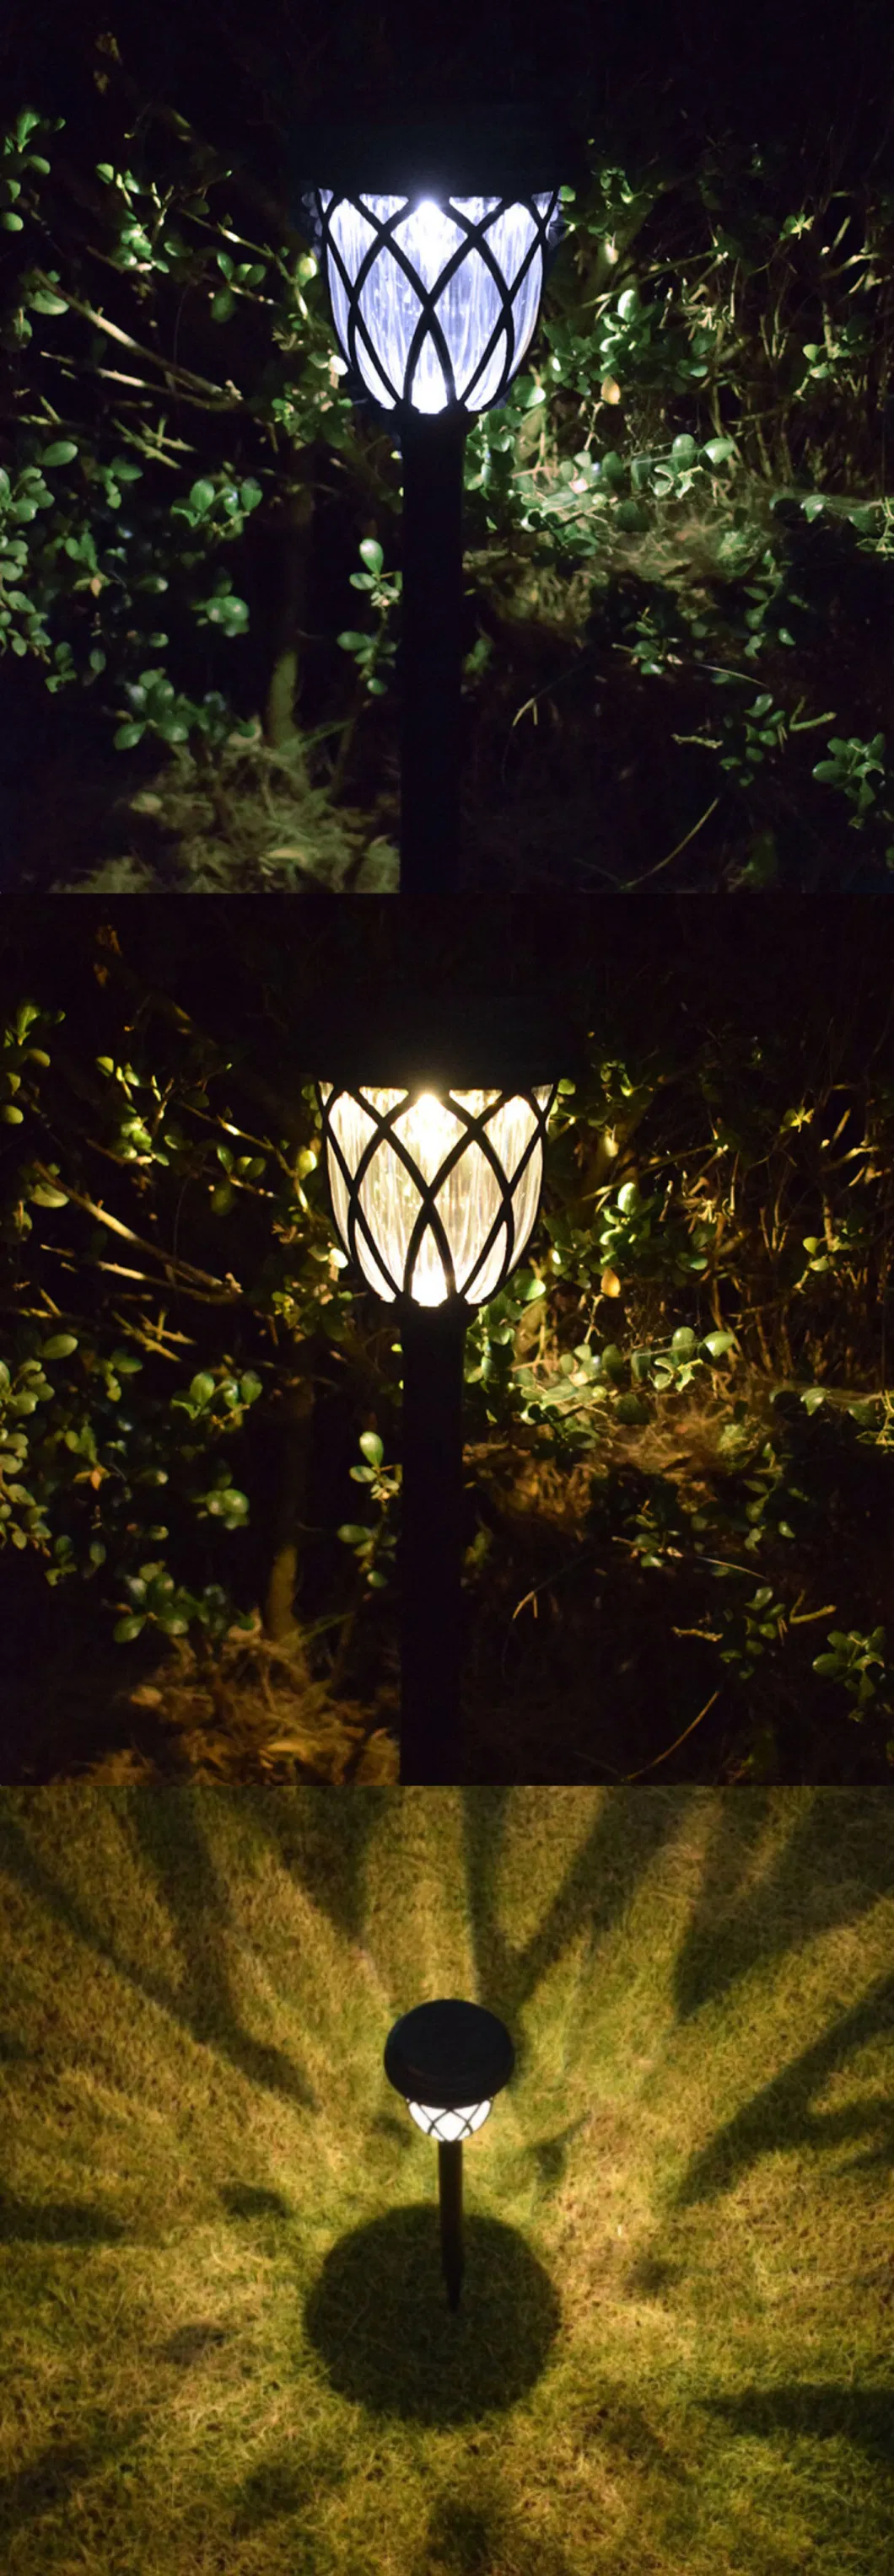 Powered Lamp Lantern Waterproof LED Garden Lights Landscape Path Yard Pathway Outdoor Solar Lawn Light